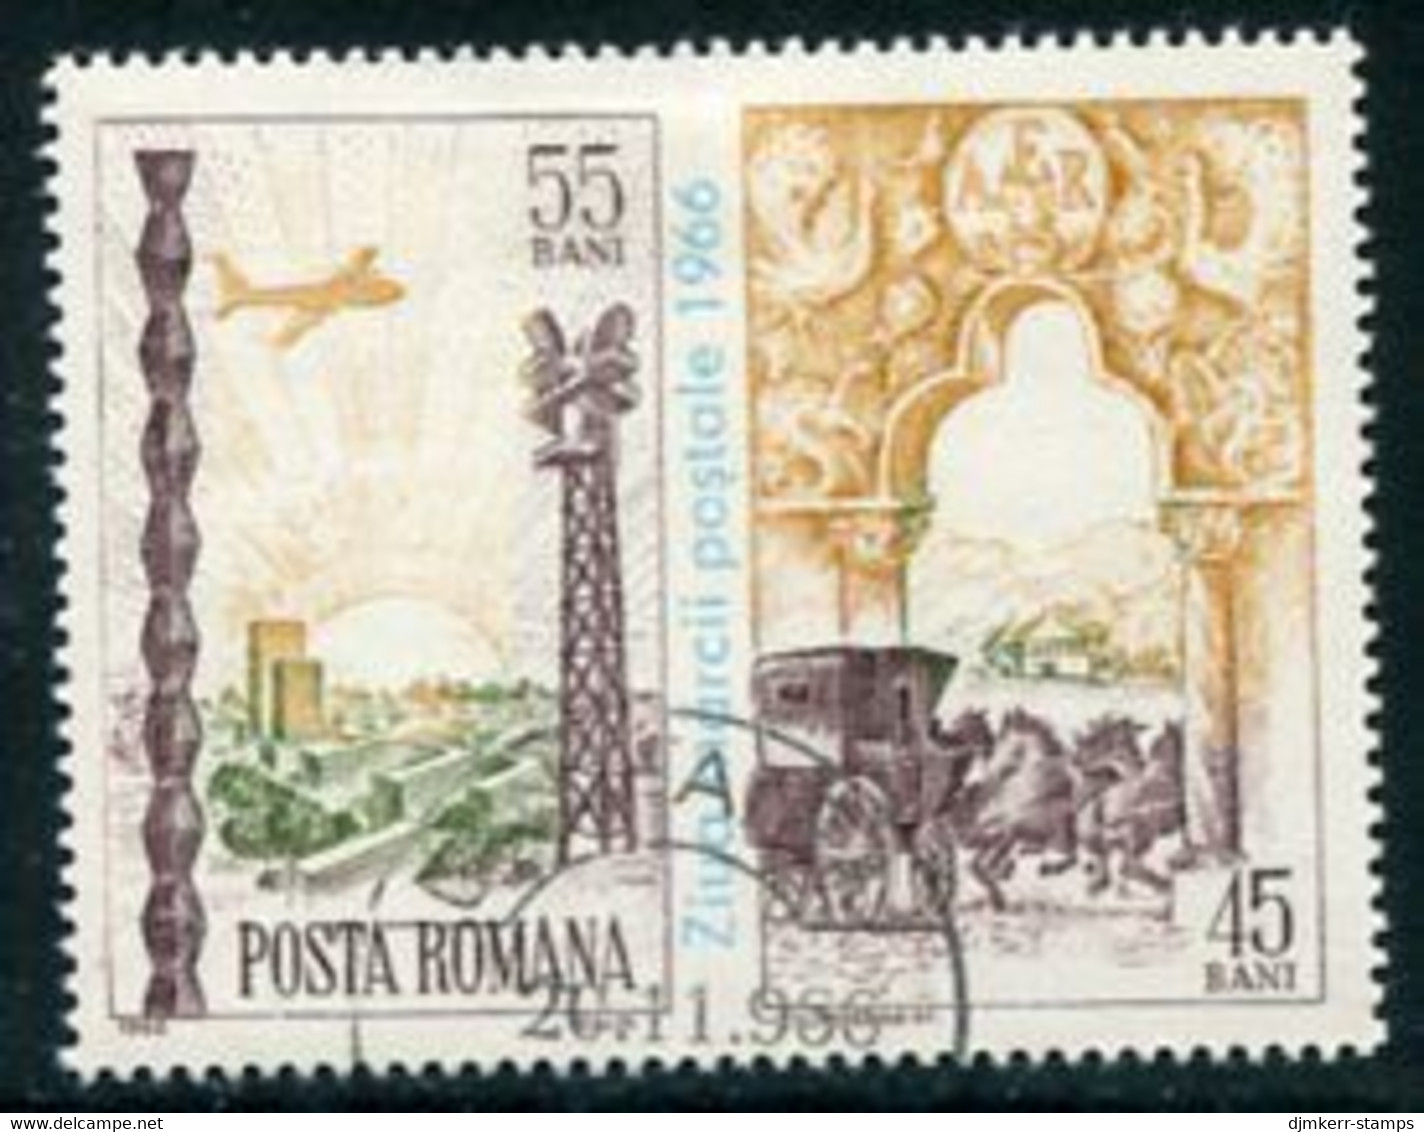 ROMANIA 1966 Stamp Day Used.  Michel 2552 - Usati